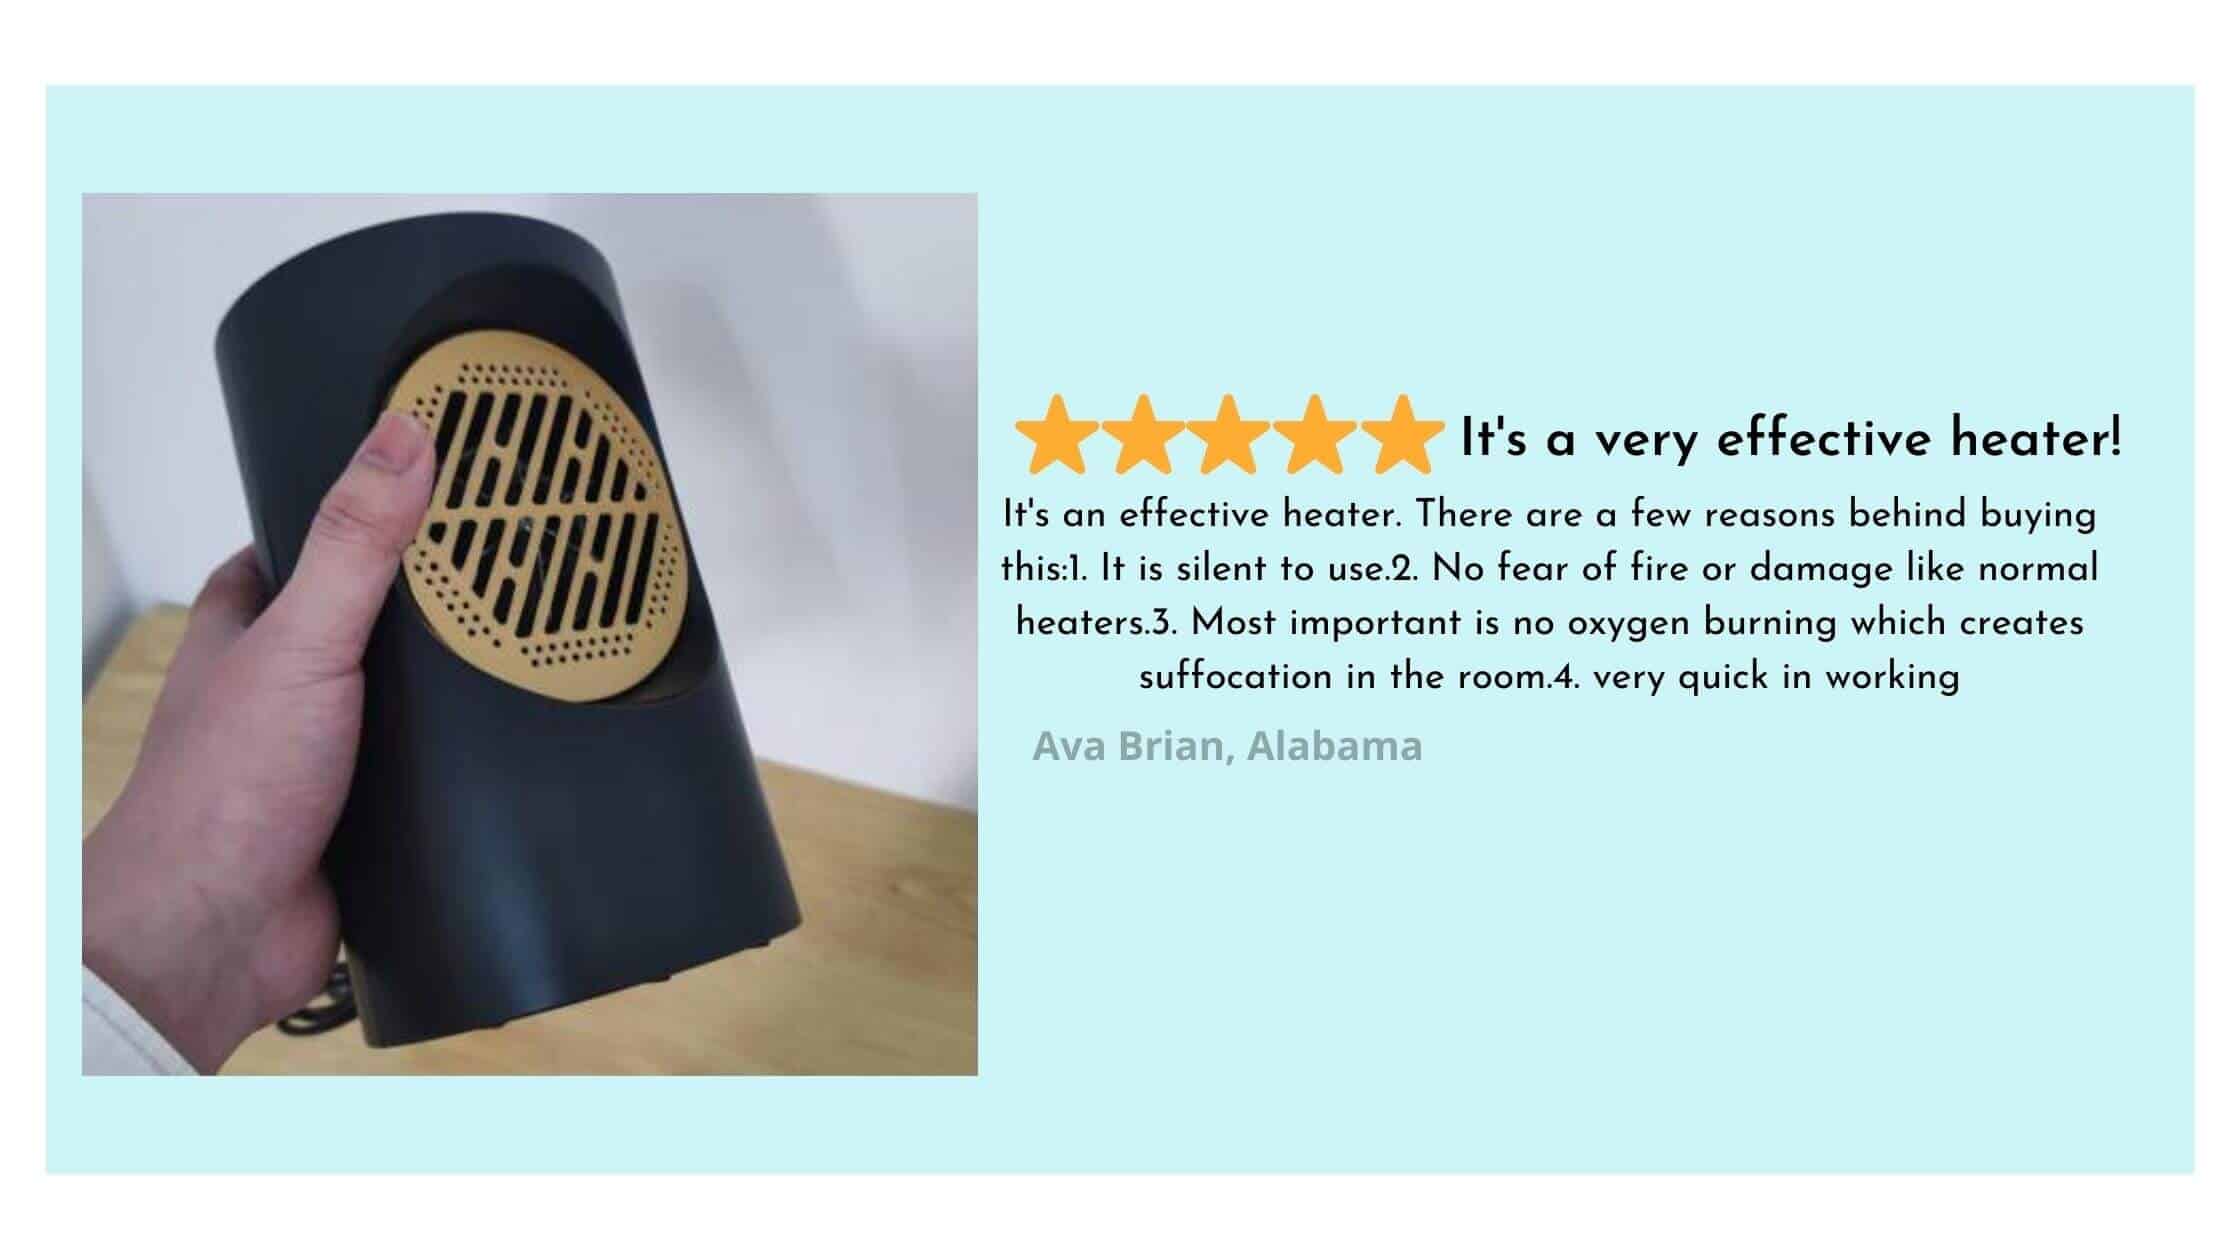 Ultra Heater customer reviews